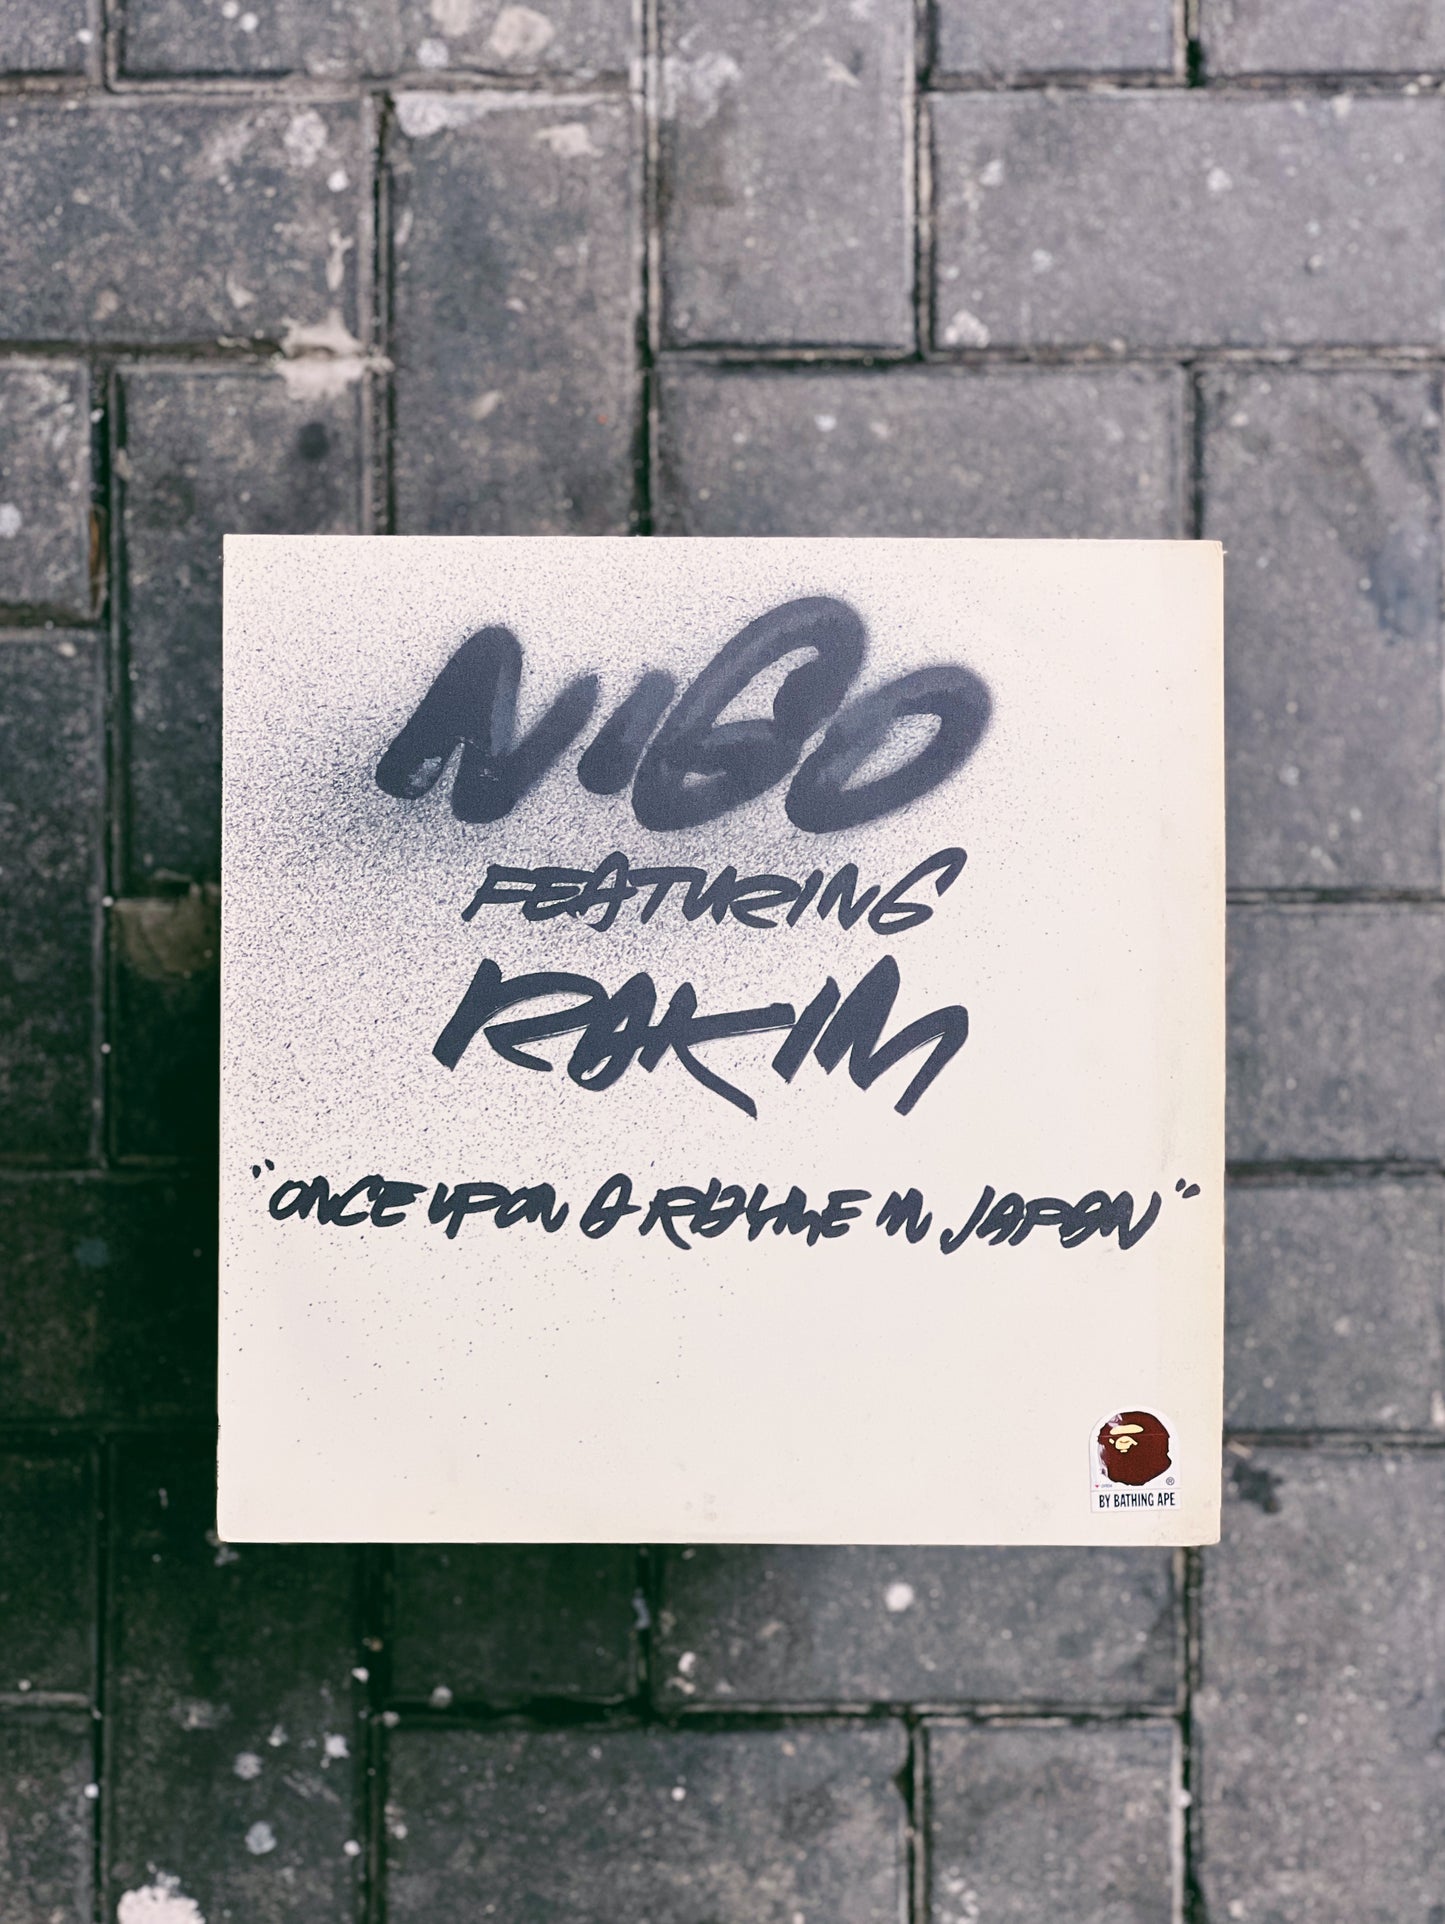 Nigo feat. Rakim - Once Upon a Rhyme in Japan 12" Single (Used)